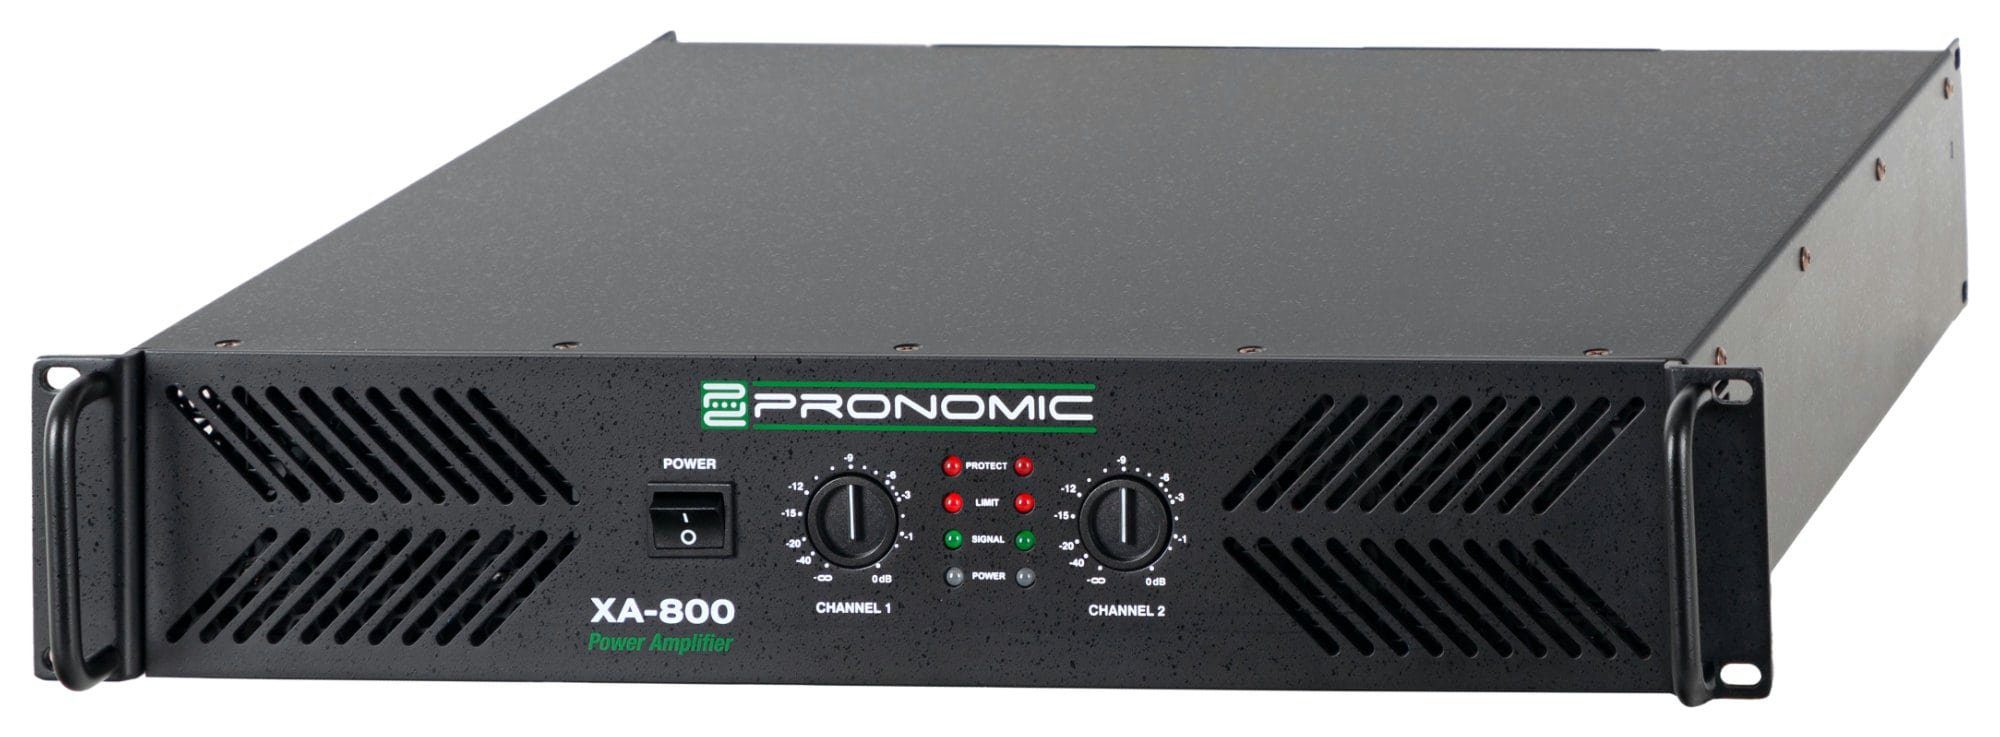 Pronomic XA-800 Endstufe 2x 800W/4 Ohm, 2x 1300W/2 Ohm, 2x 1900W  Audioverstärker (2600 W, Schaltungstype: Class H)